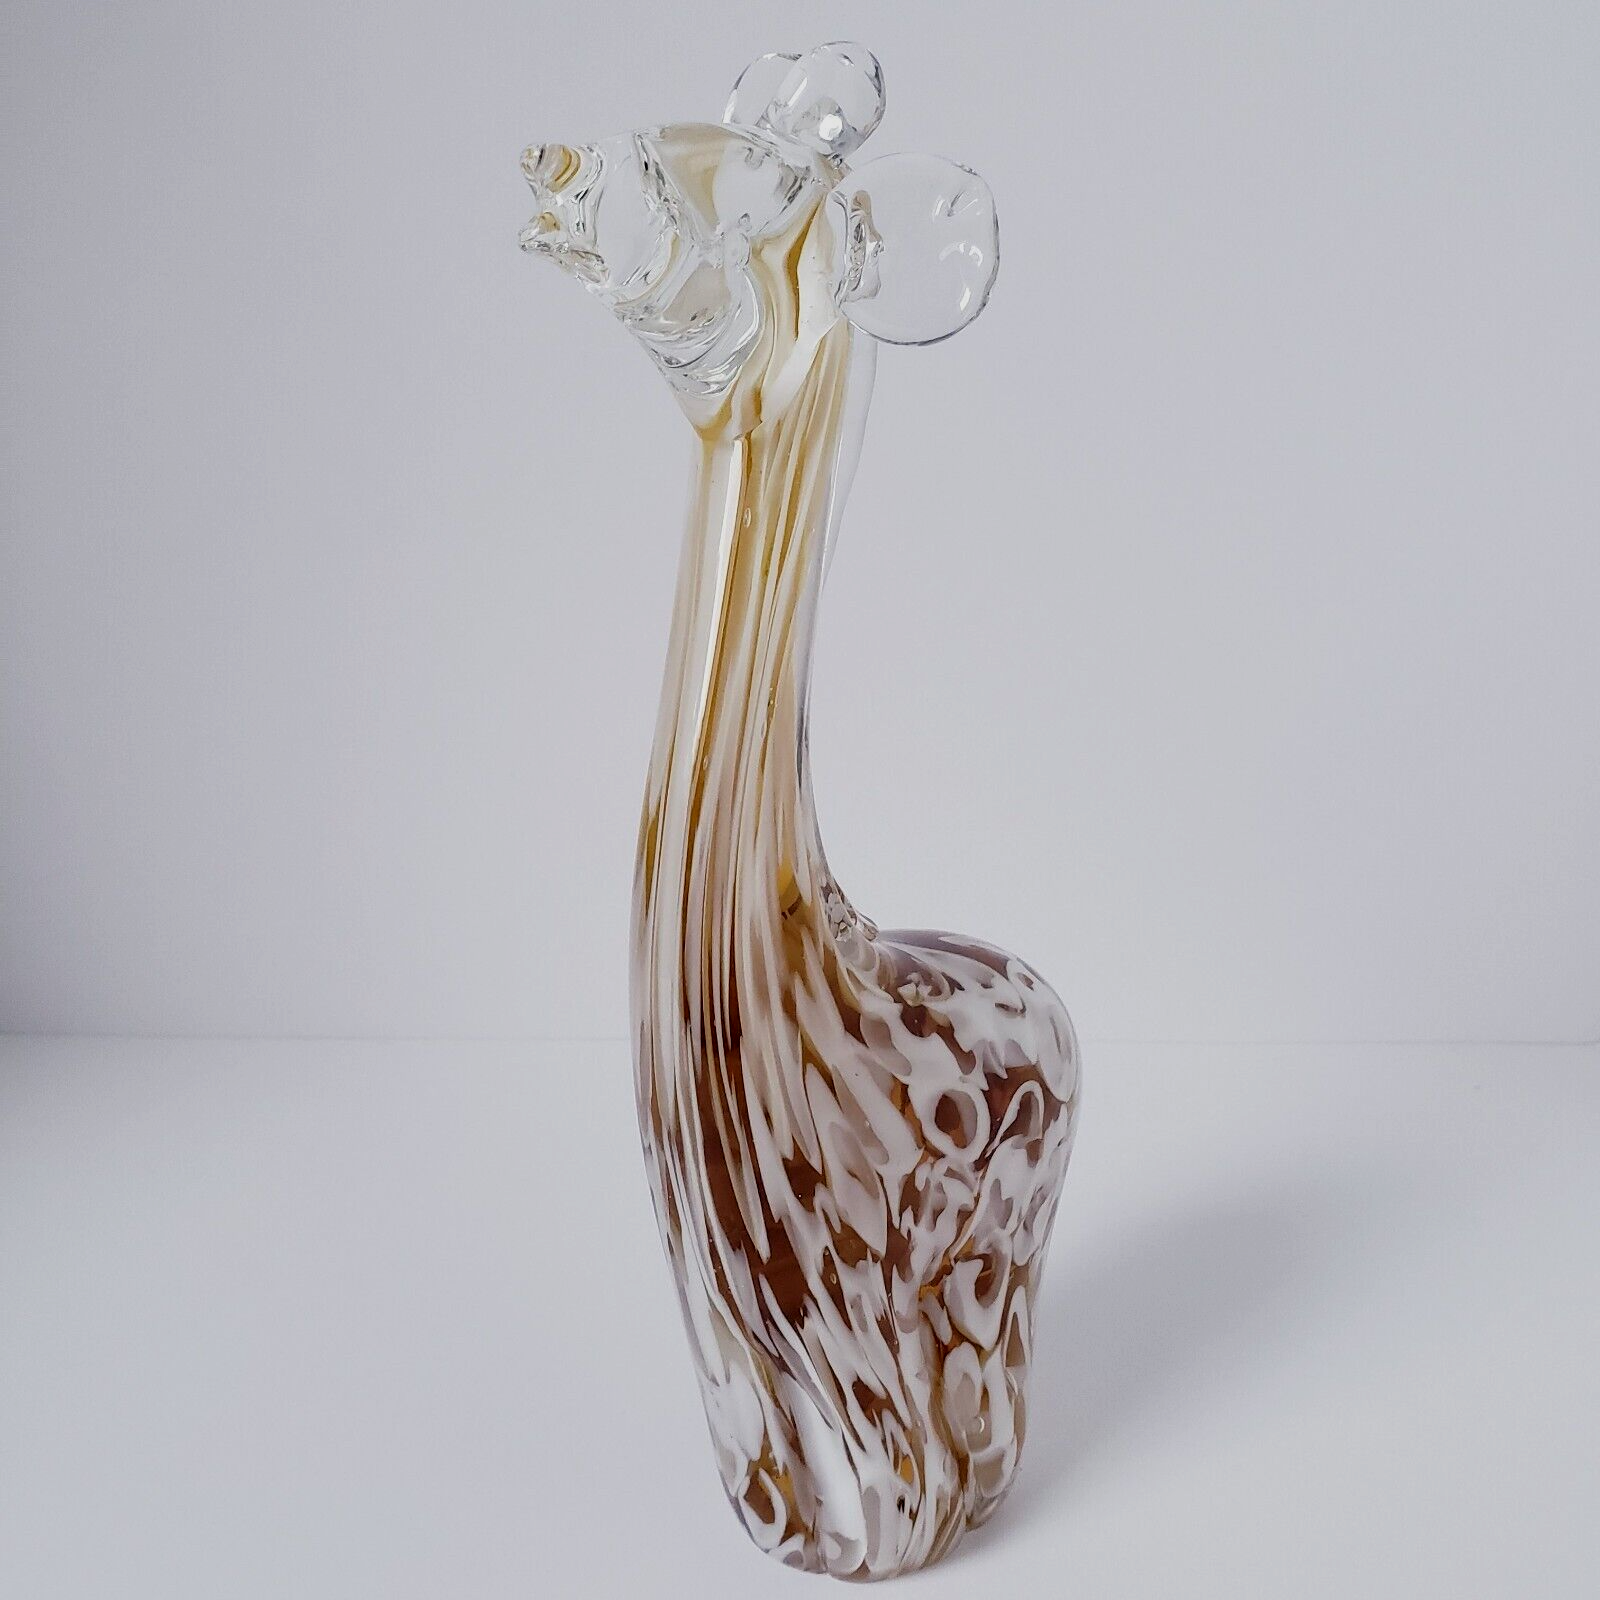 Primary image for Hand-Blown Art Glass 10” Paper Weight Giraffe Figurine Sculpture Amber White